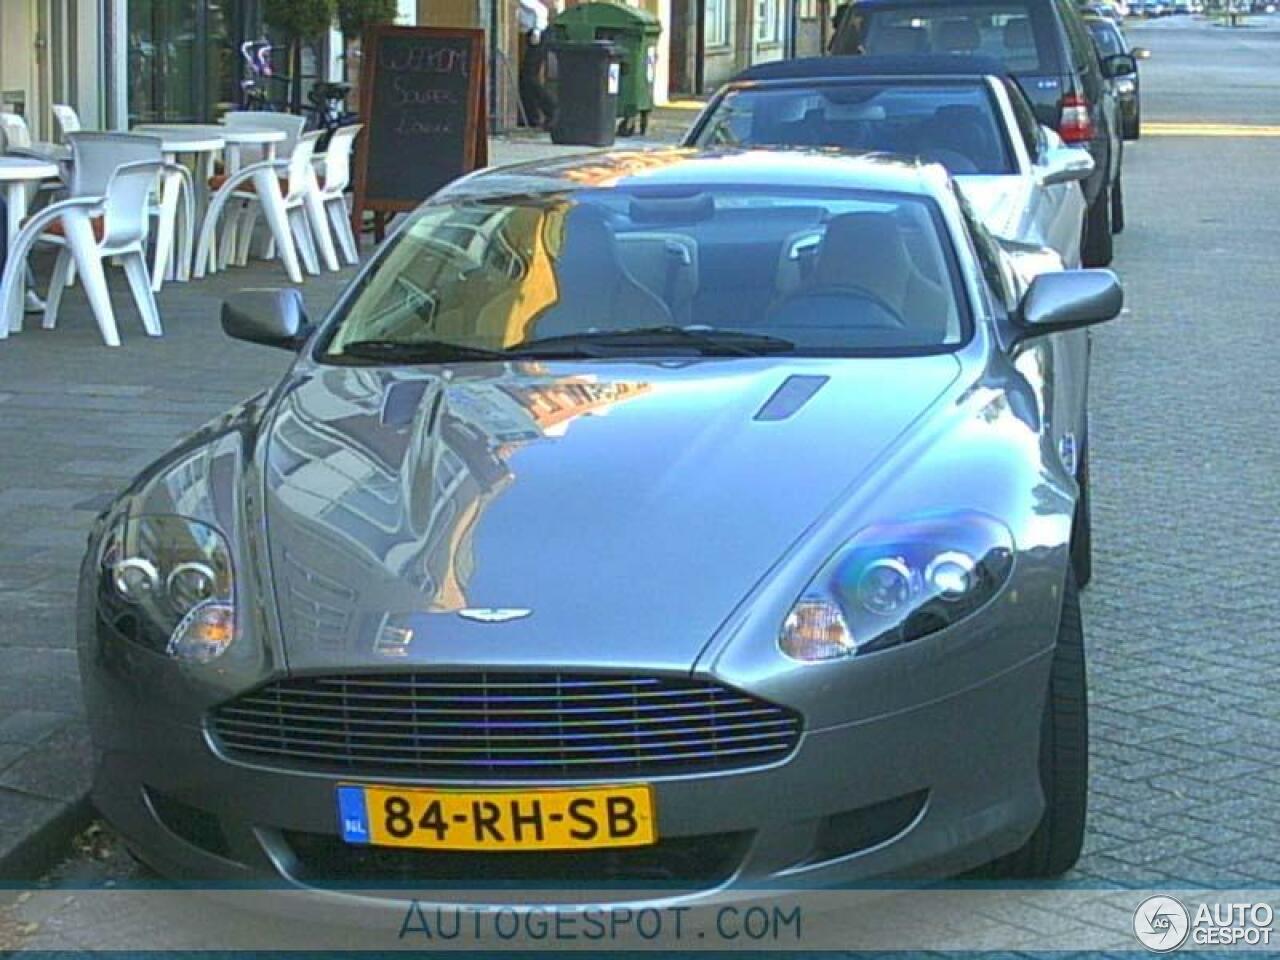 Aston Martin DB9 - 23 September 2005 - Autogespot